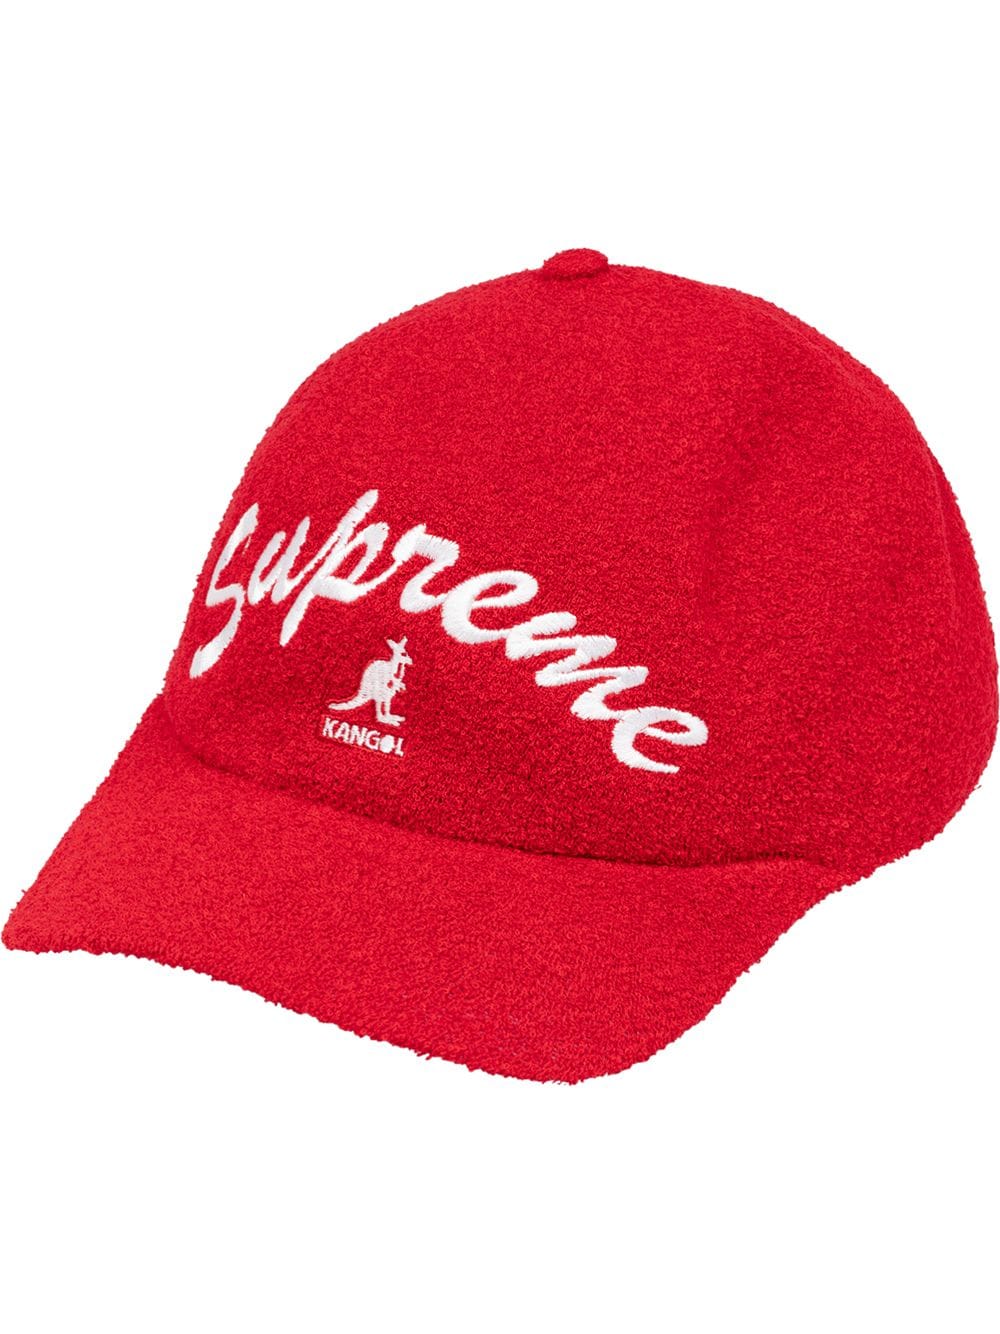 Supreme x Kangol Bermuda Spacecap - Red von Supreme